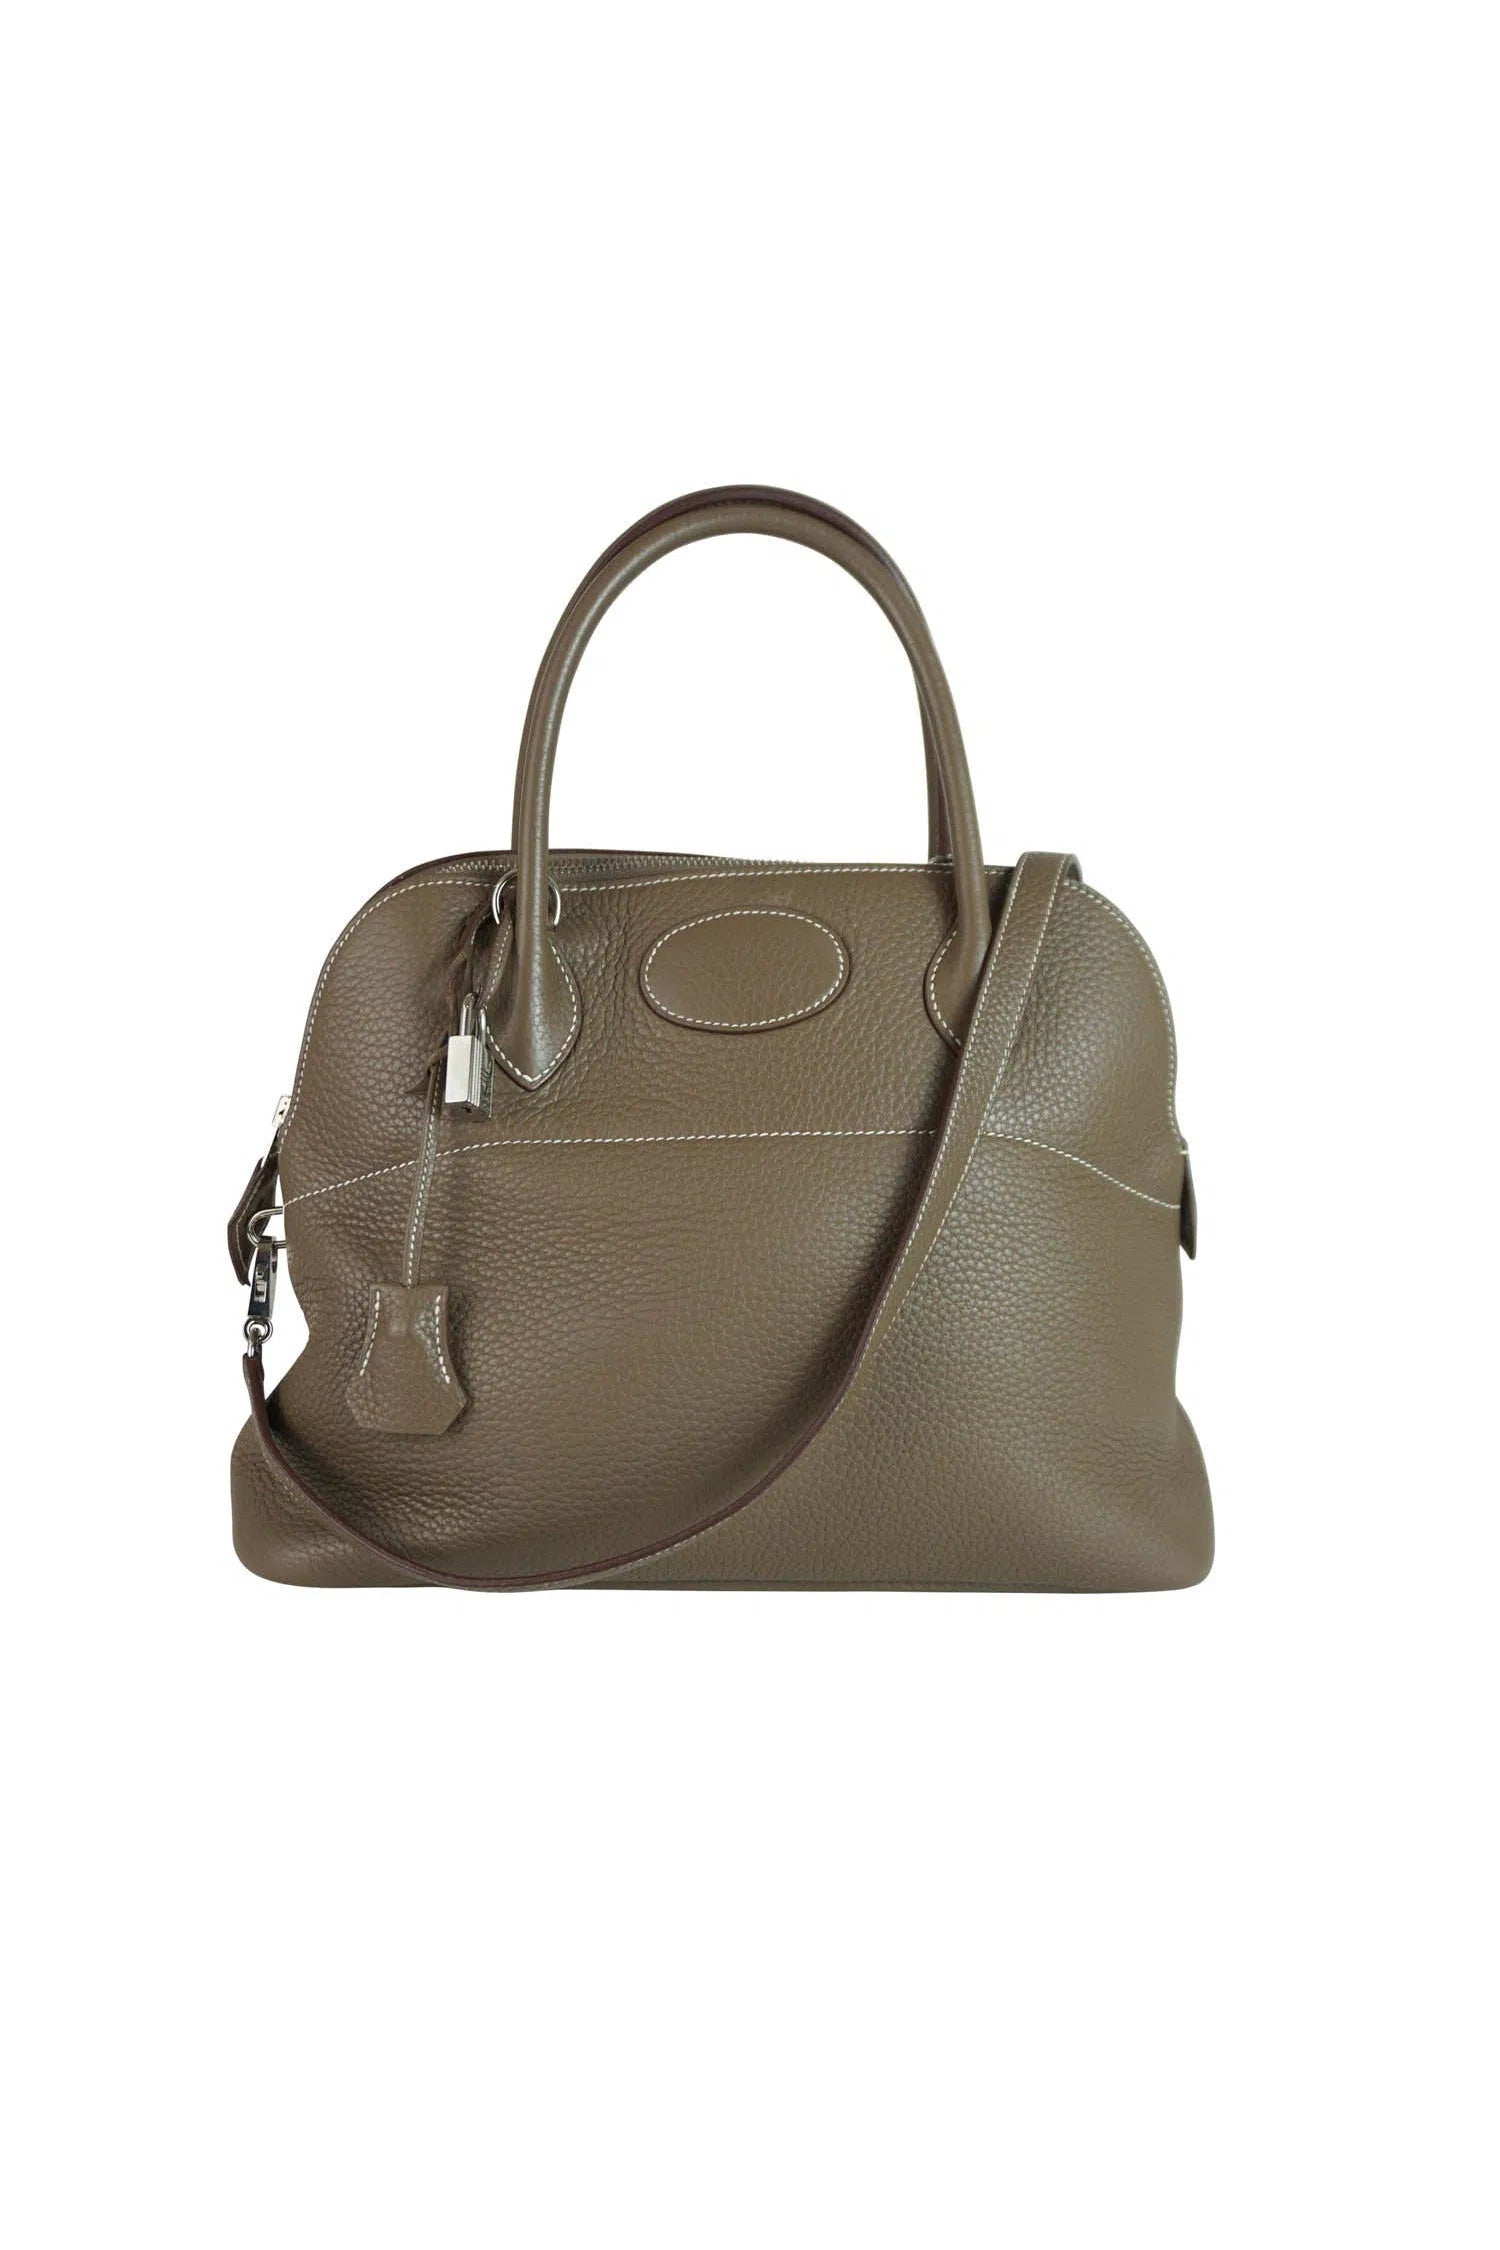 Hermès 31 Bolide Etoupe Clemence Bag 2011